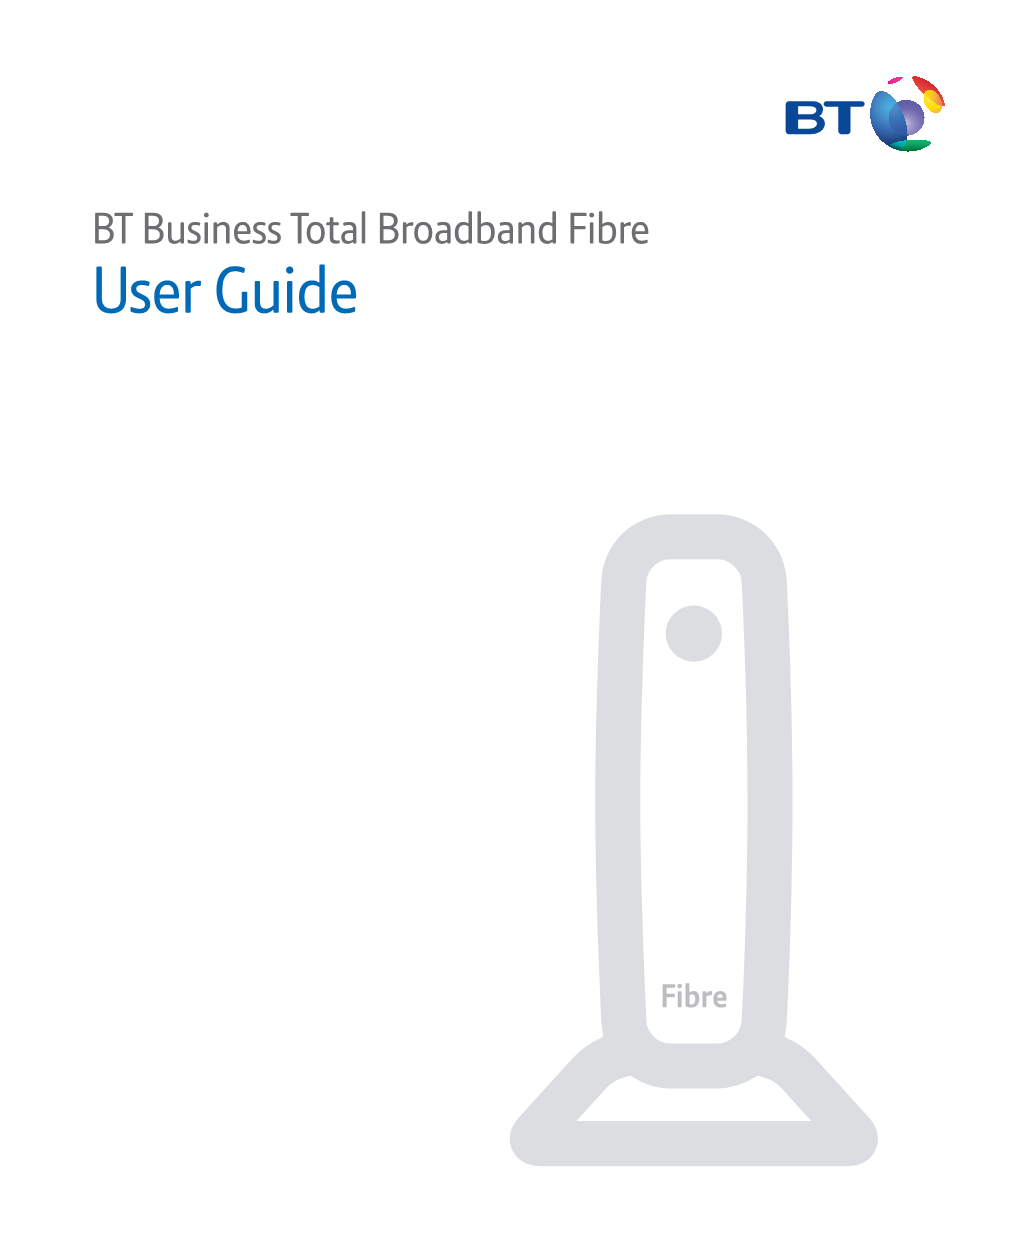 BT Business Total Broadband Fibre User Guide